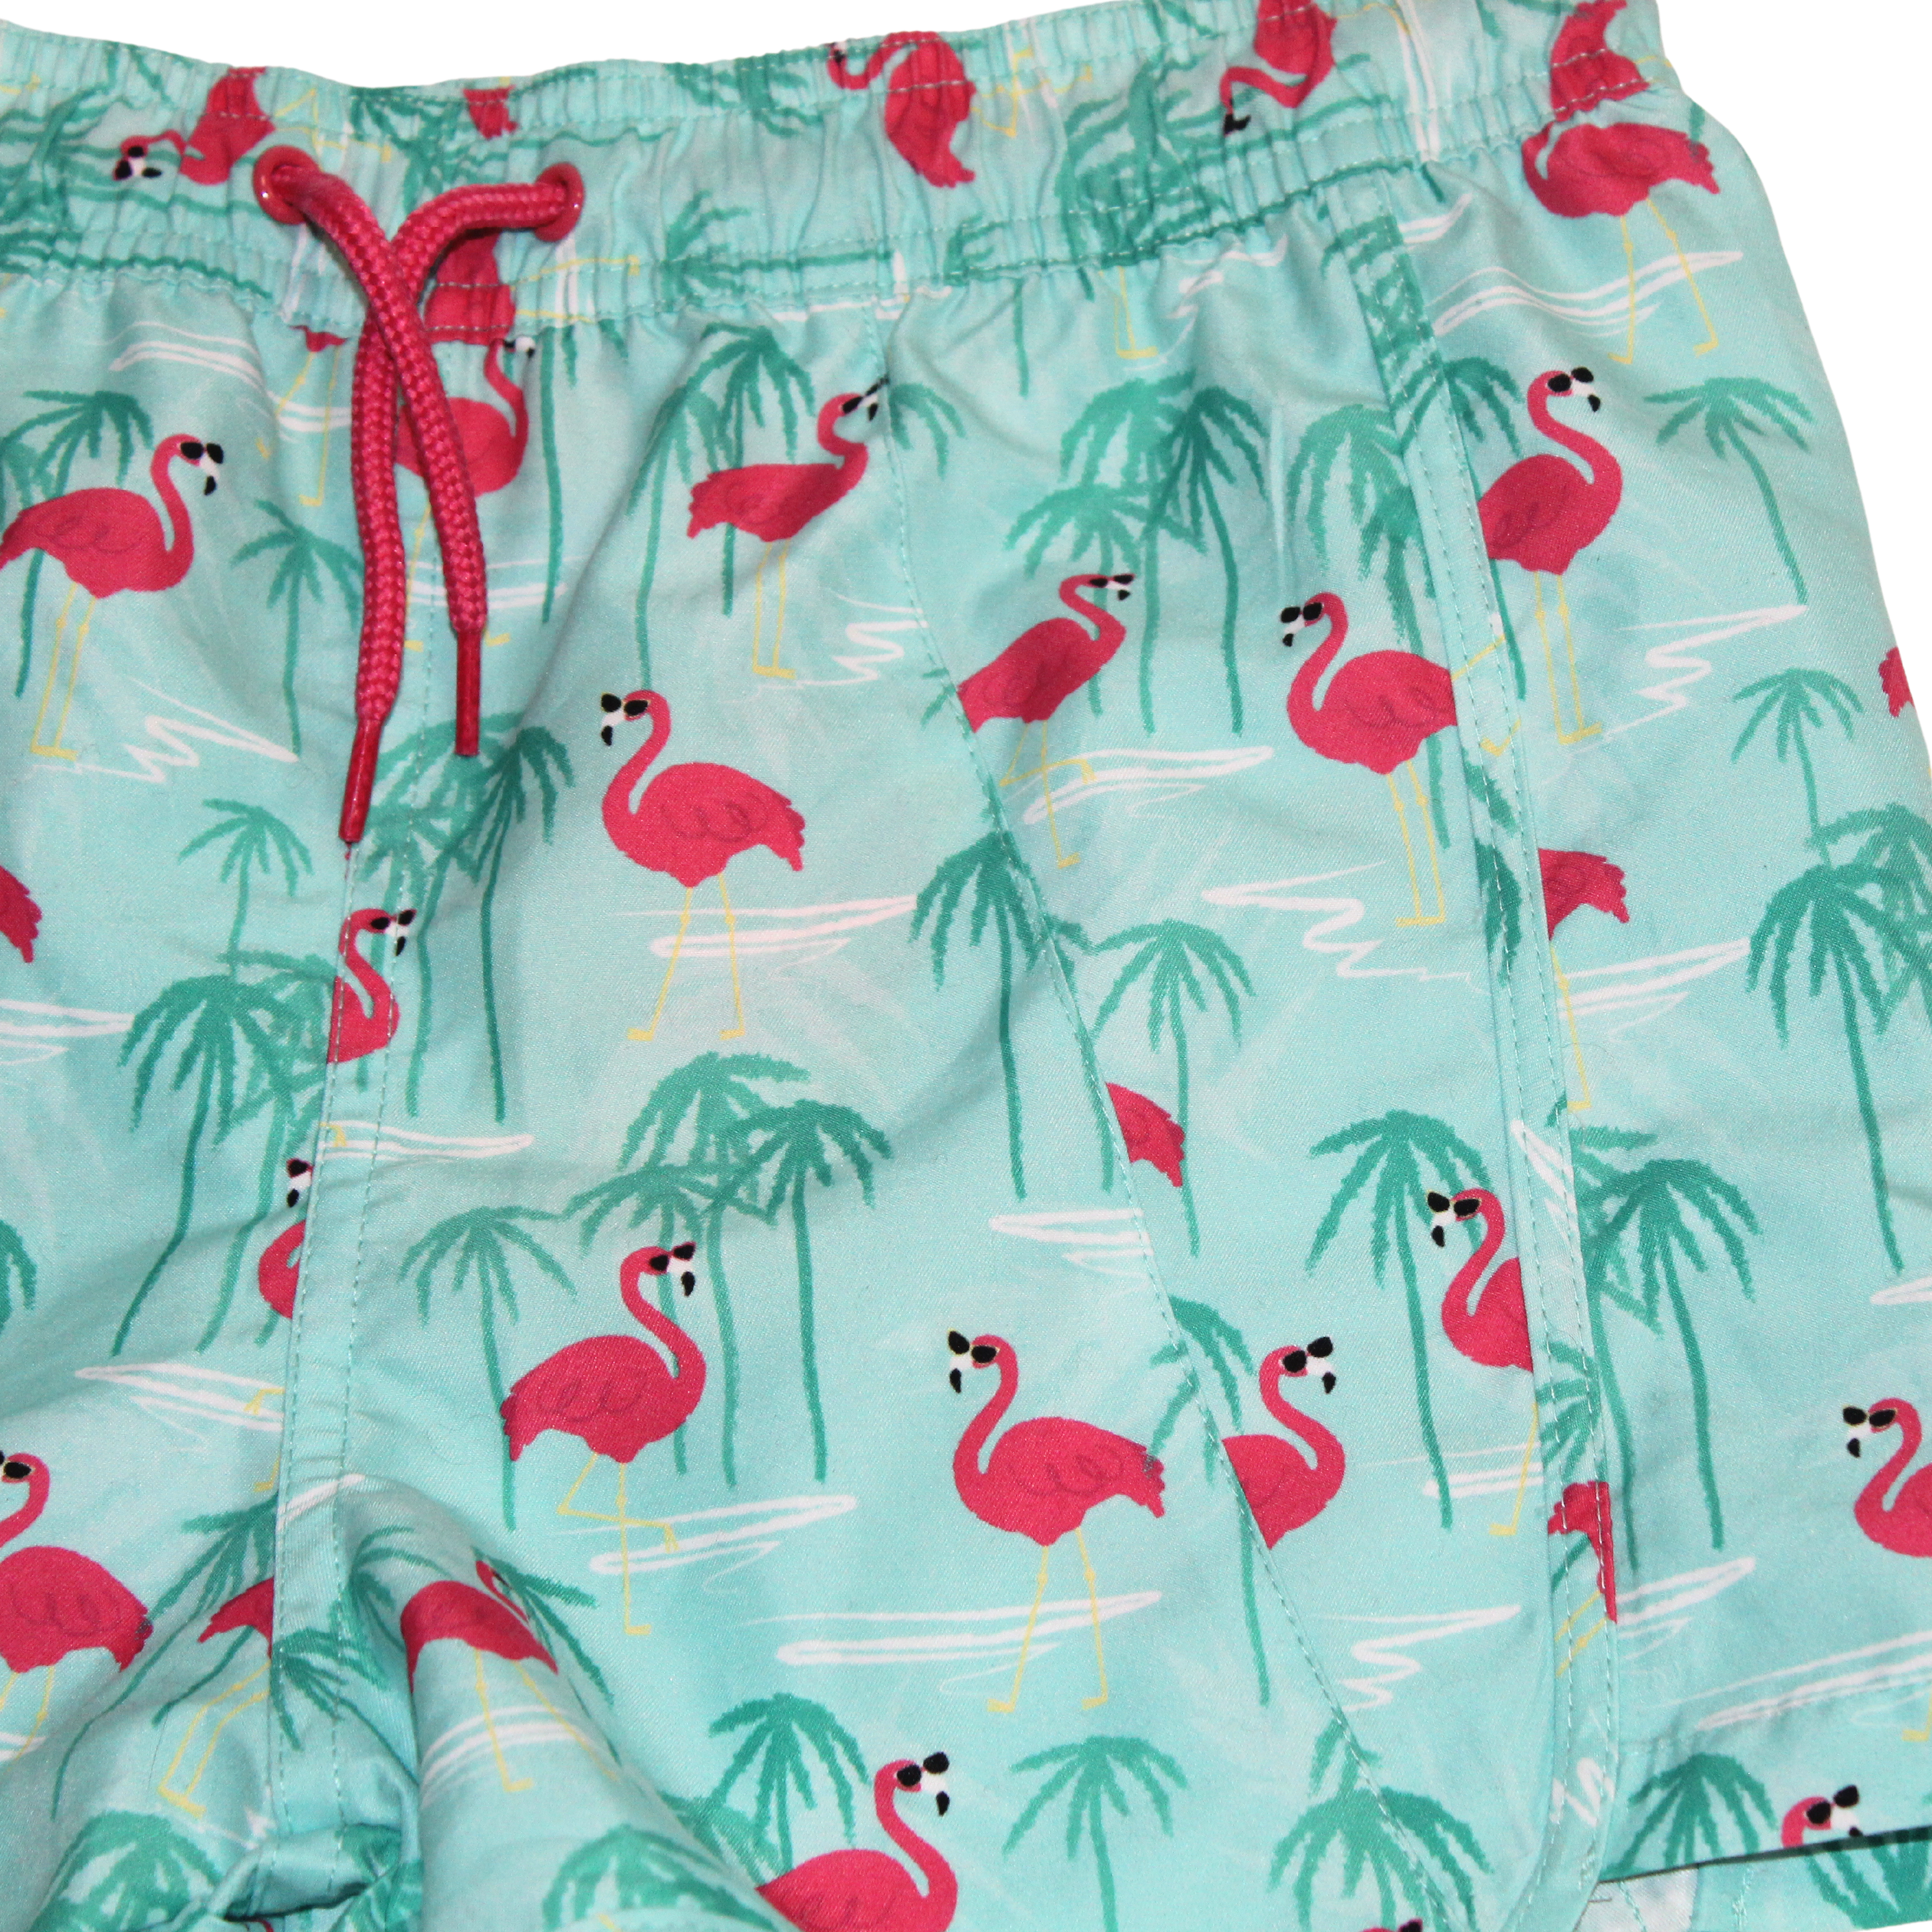 Flamingo Beach Shorts